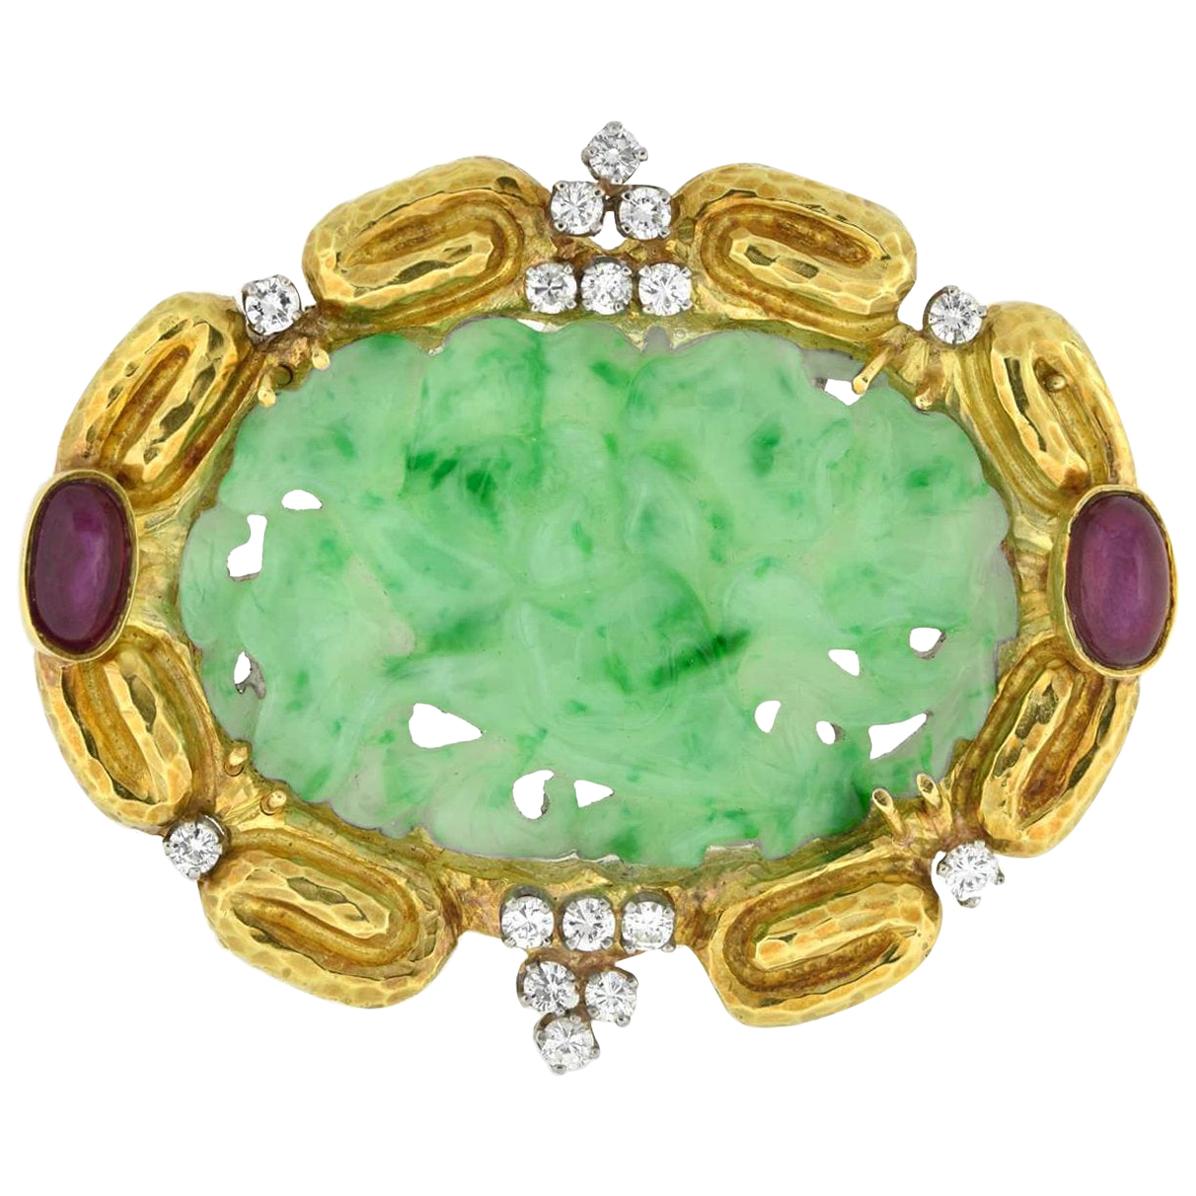 Grande broche contemporaine en or 18 carats sculptée de jade, rubis et diamants